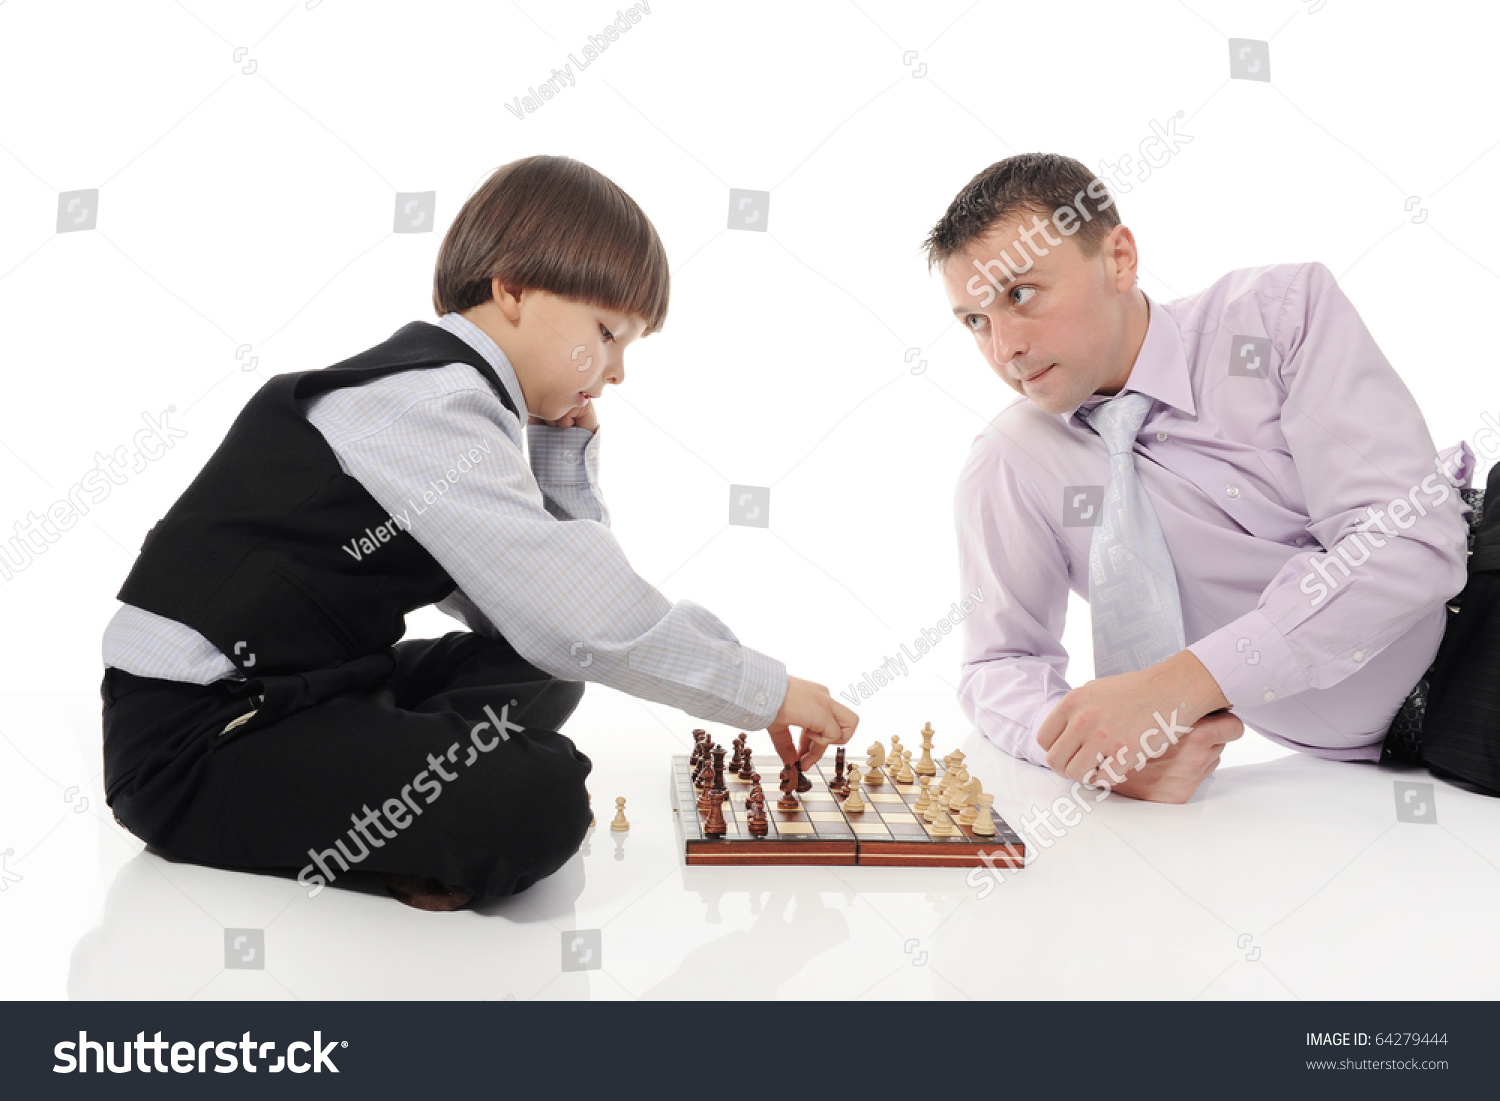 Папа играет в шахматы. Игра в шахматы отец и сын. Папа с сыном играют в шахматы. Папа - шахматист.